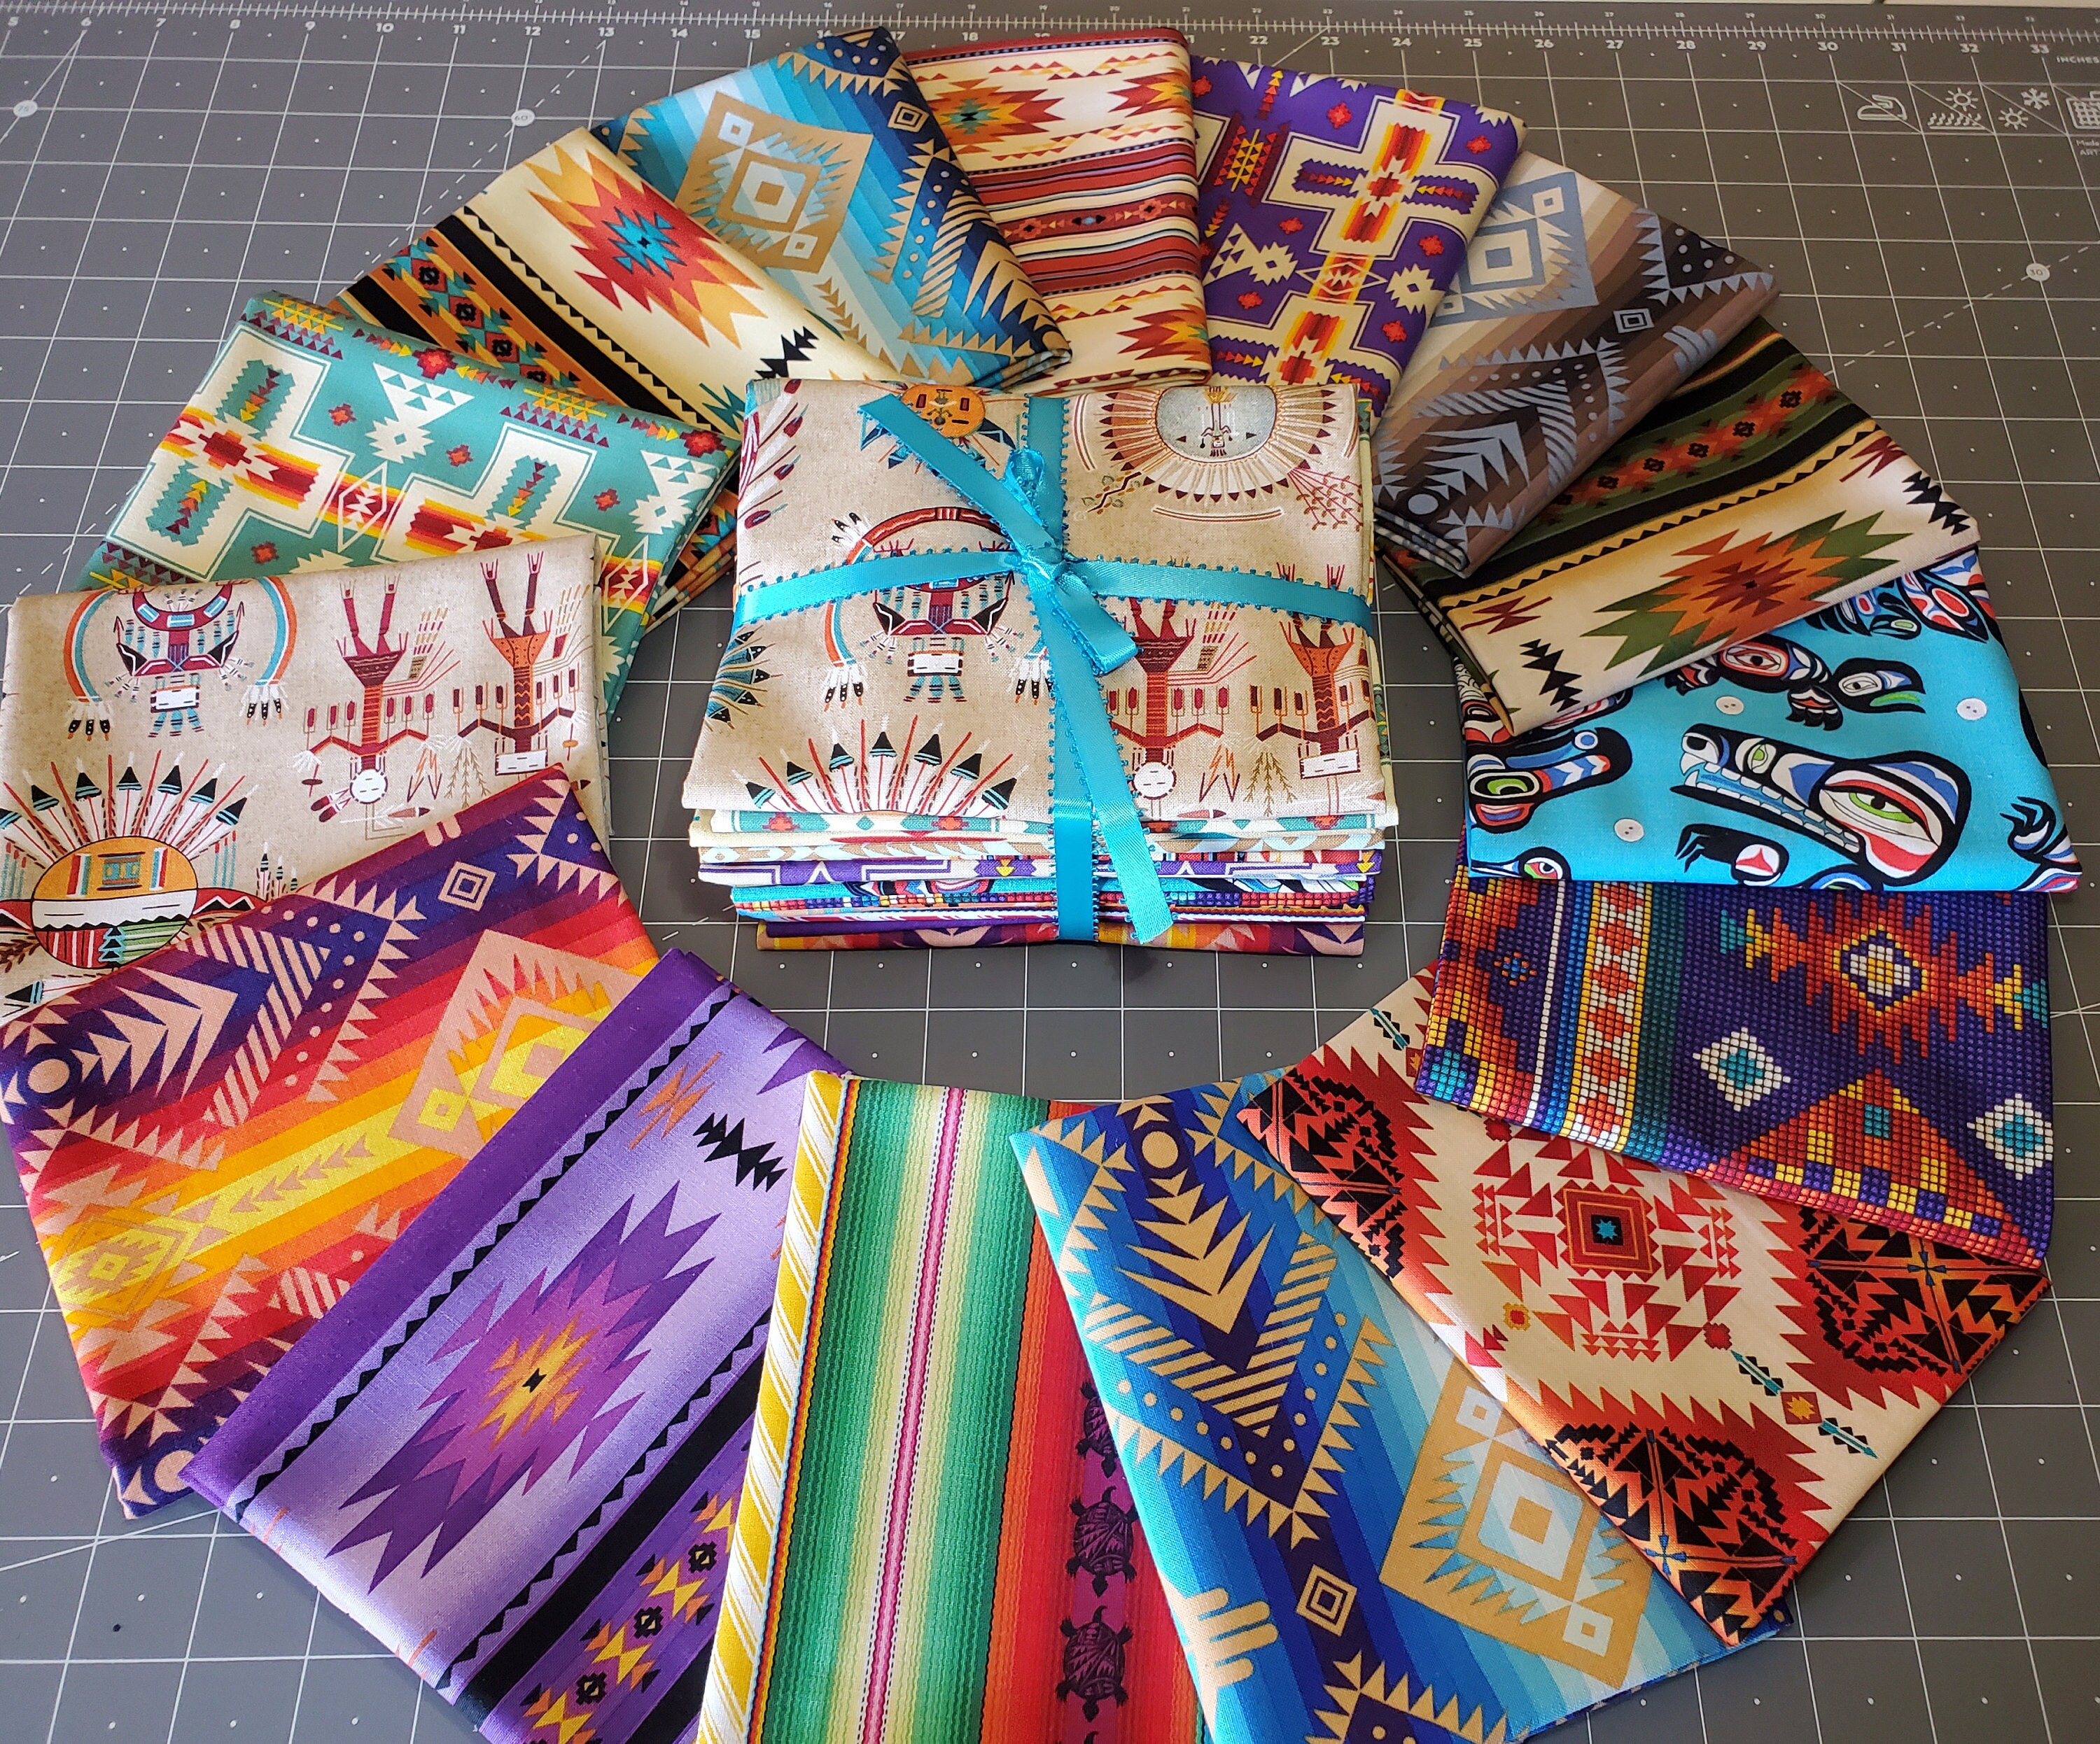 Tucson Southwest, Native Inspired 5-17 Pc Fat Quarter Fabric Bundles! 100%  Cotto